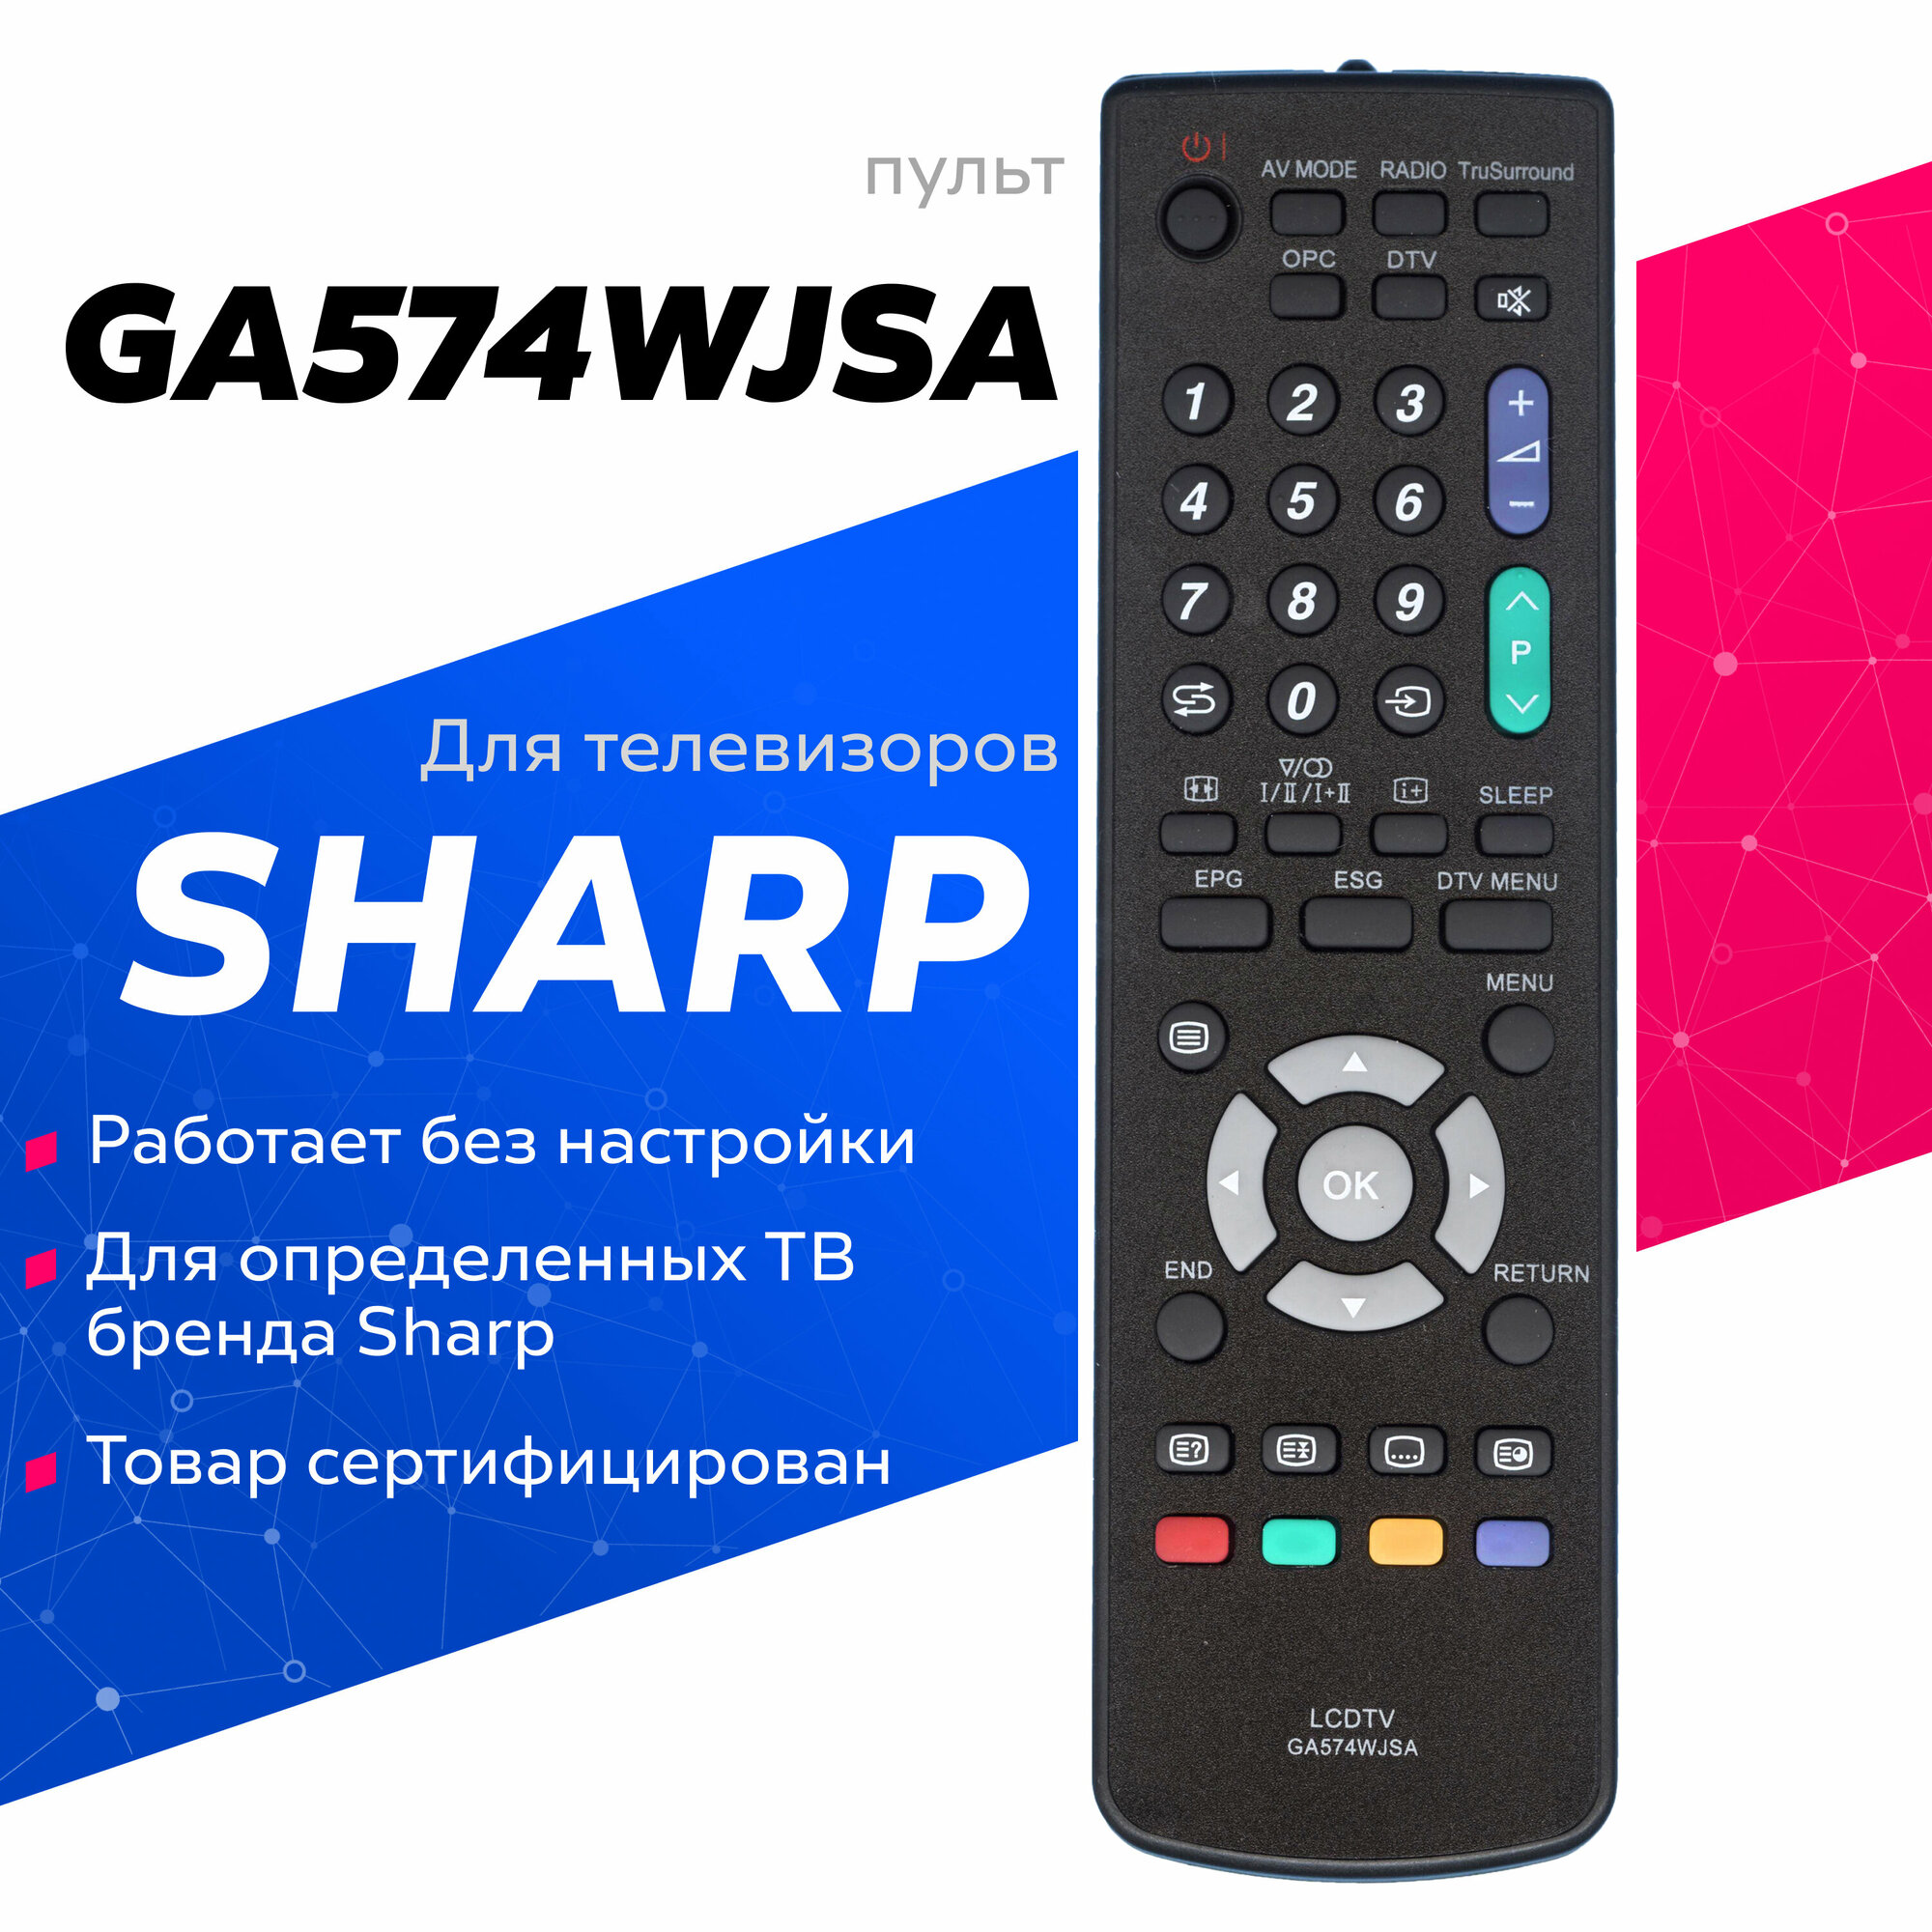 Пульт GA574WJSA для телевизора Sharp